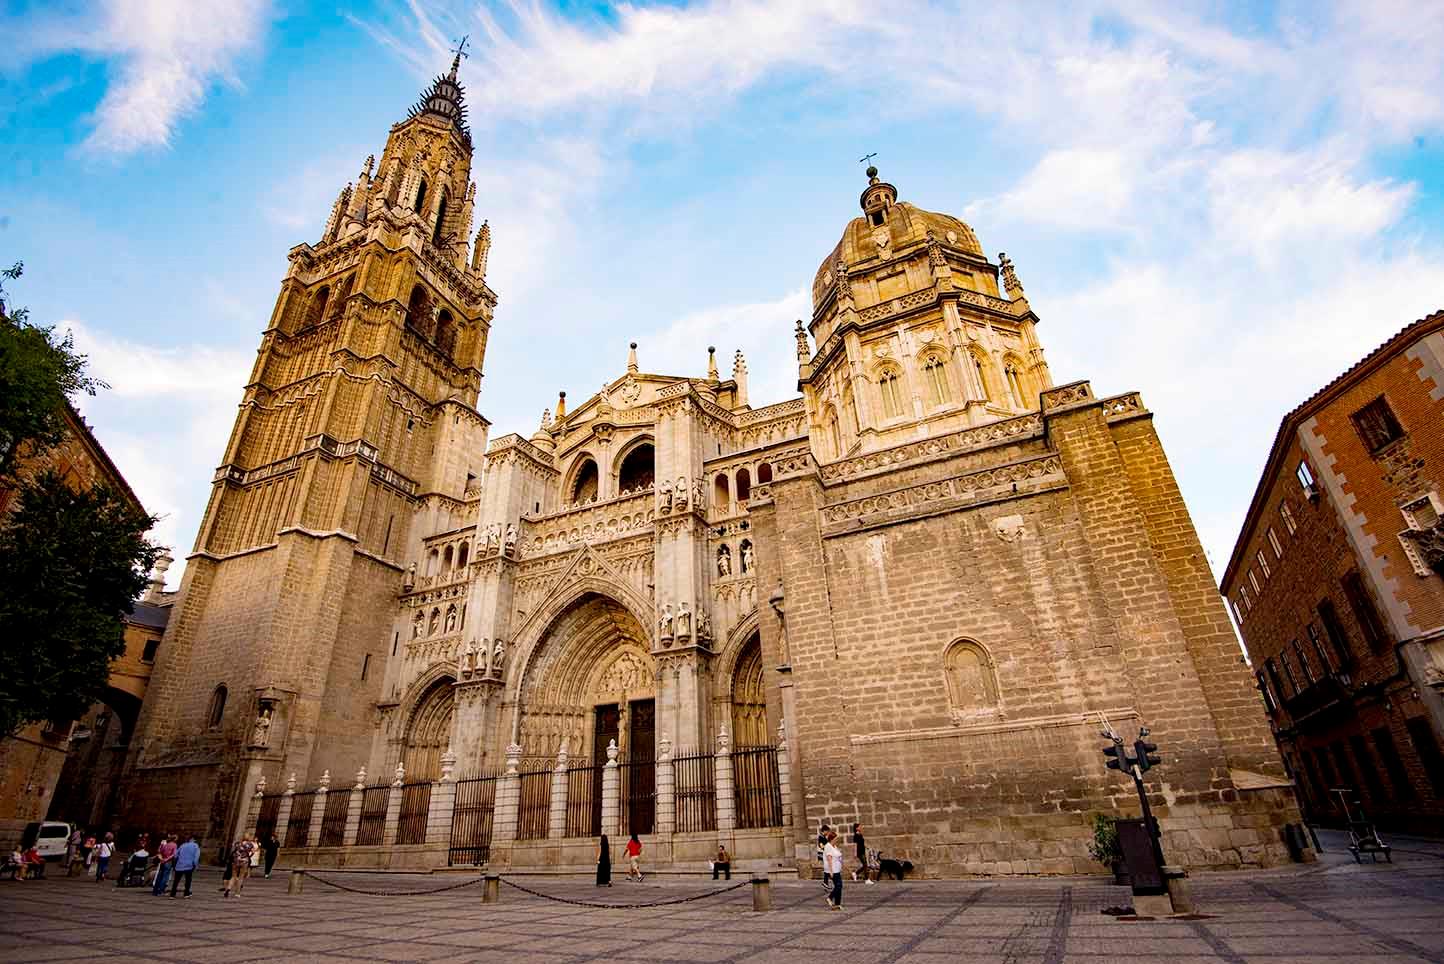 Entrada + Visita Guiada a la Catedral de Toledo